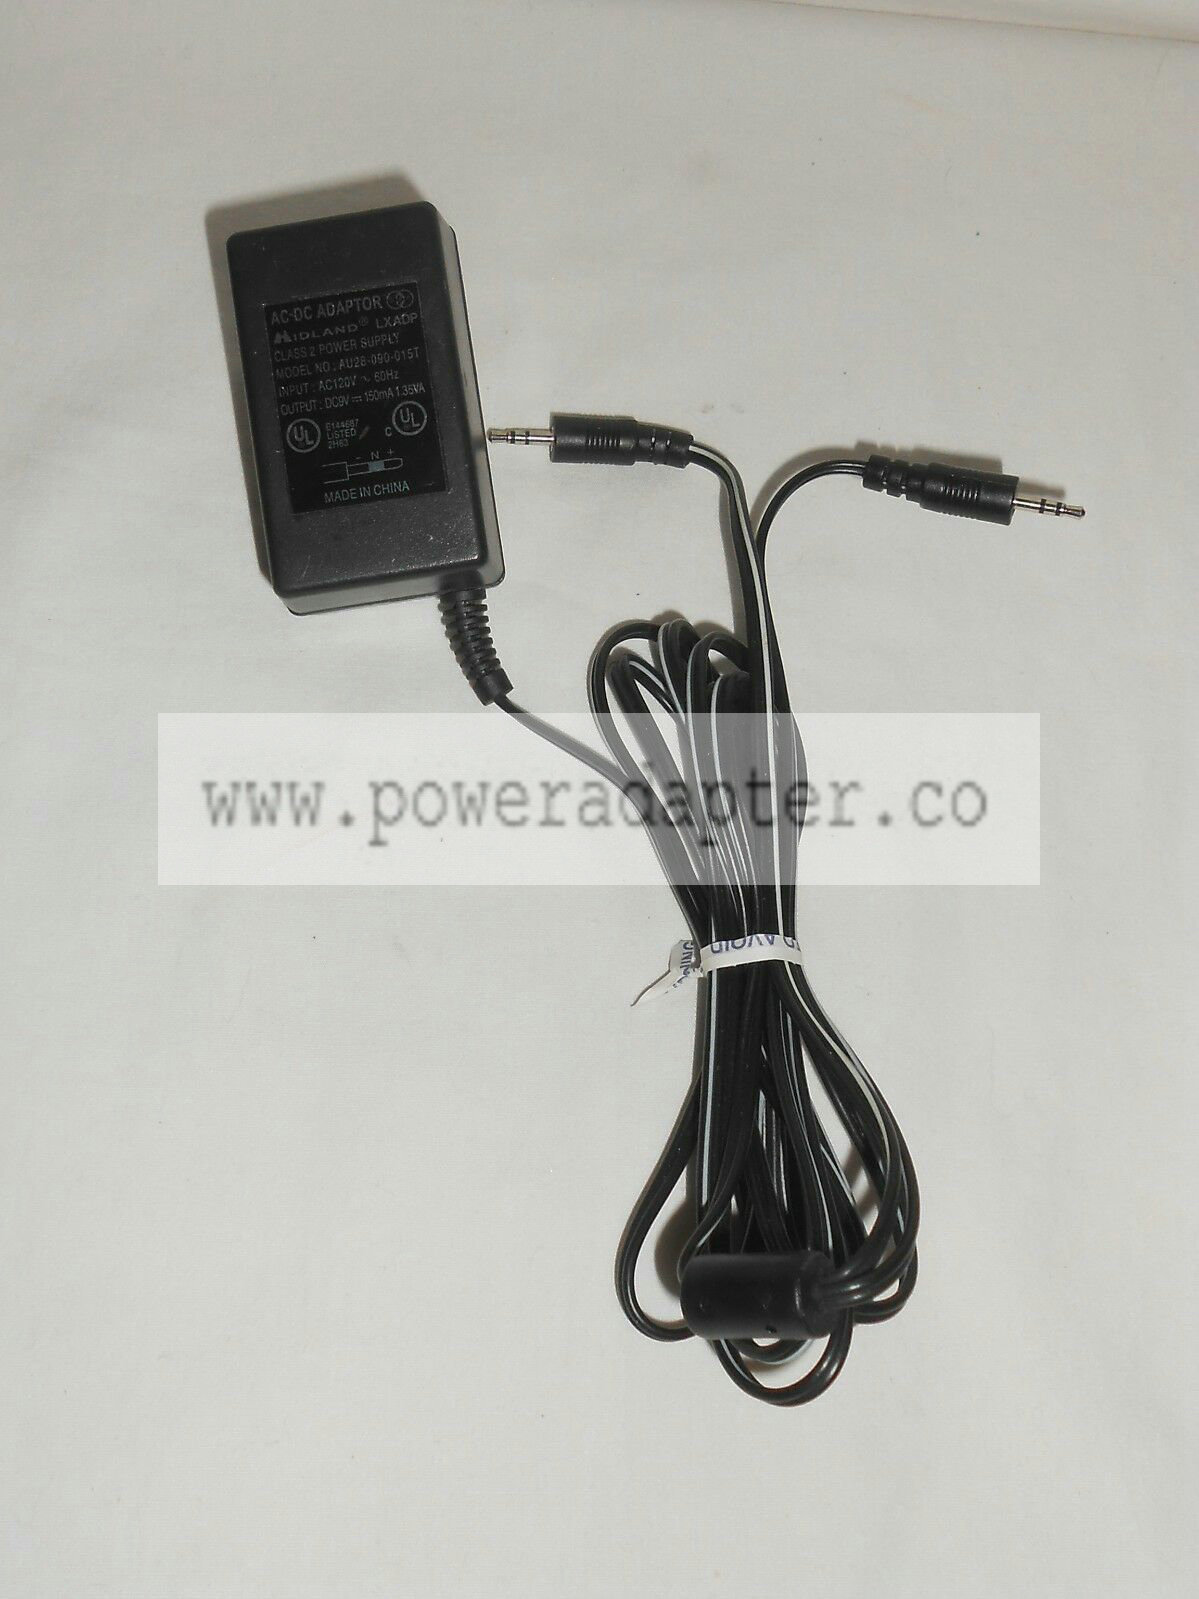 Midland LXADP AC Adapter Model AU28-090-015T Dual Male Plugs 9V Model: AU28-090-015T Output Voltage: 9V MPN: Does N